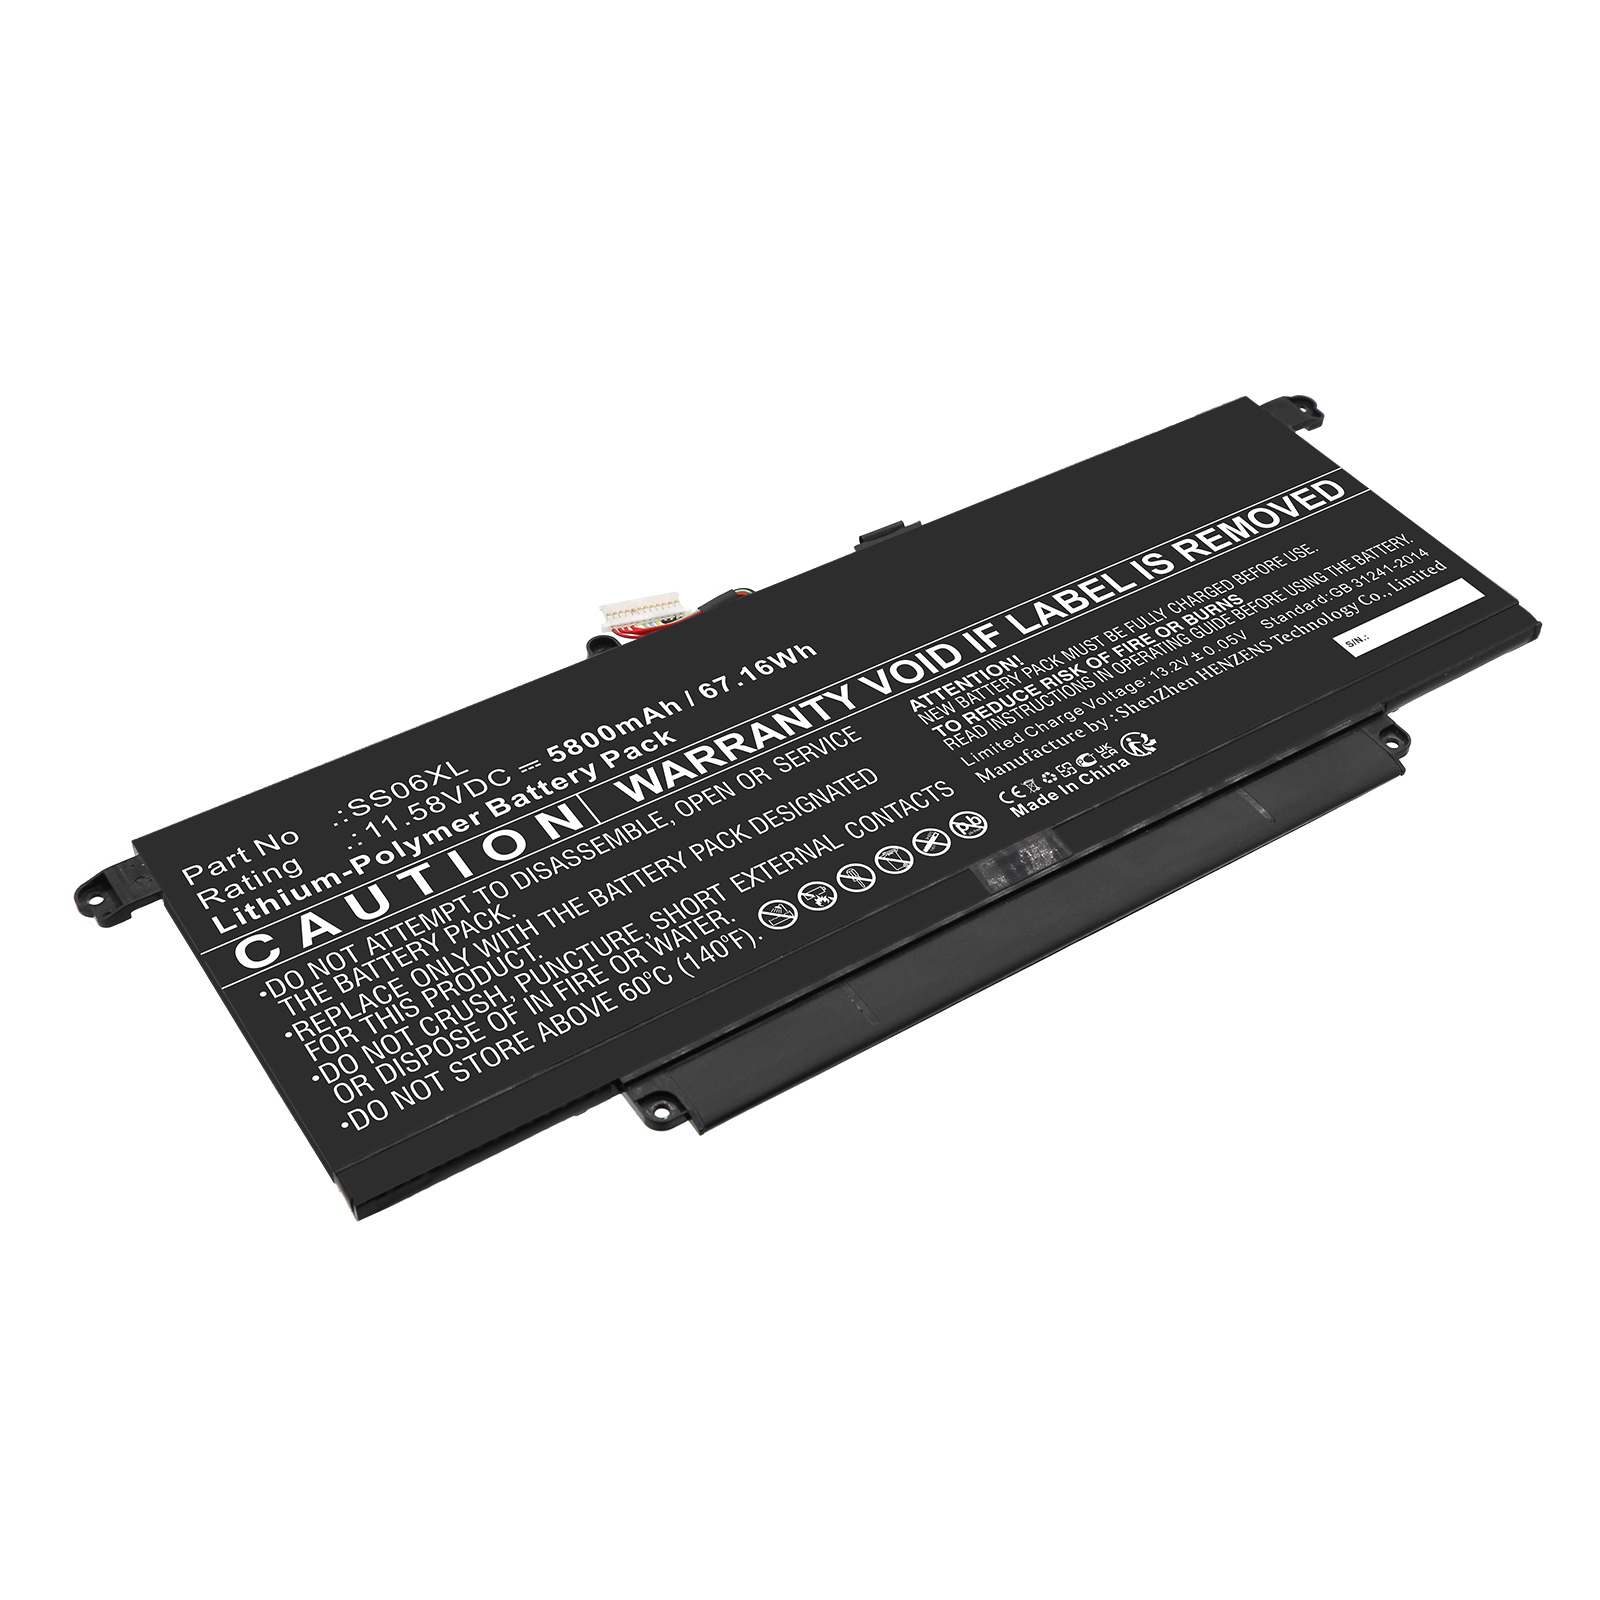 Synergy Digital Laptop Battery, Compatible with HP M64310-271 Laptop Battery (Li-Pol, 11.58V, 5800mAh)